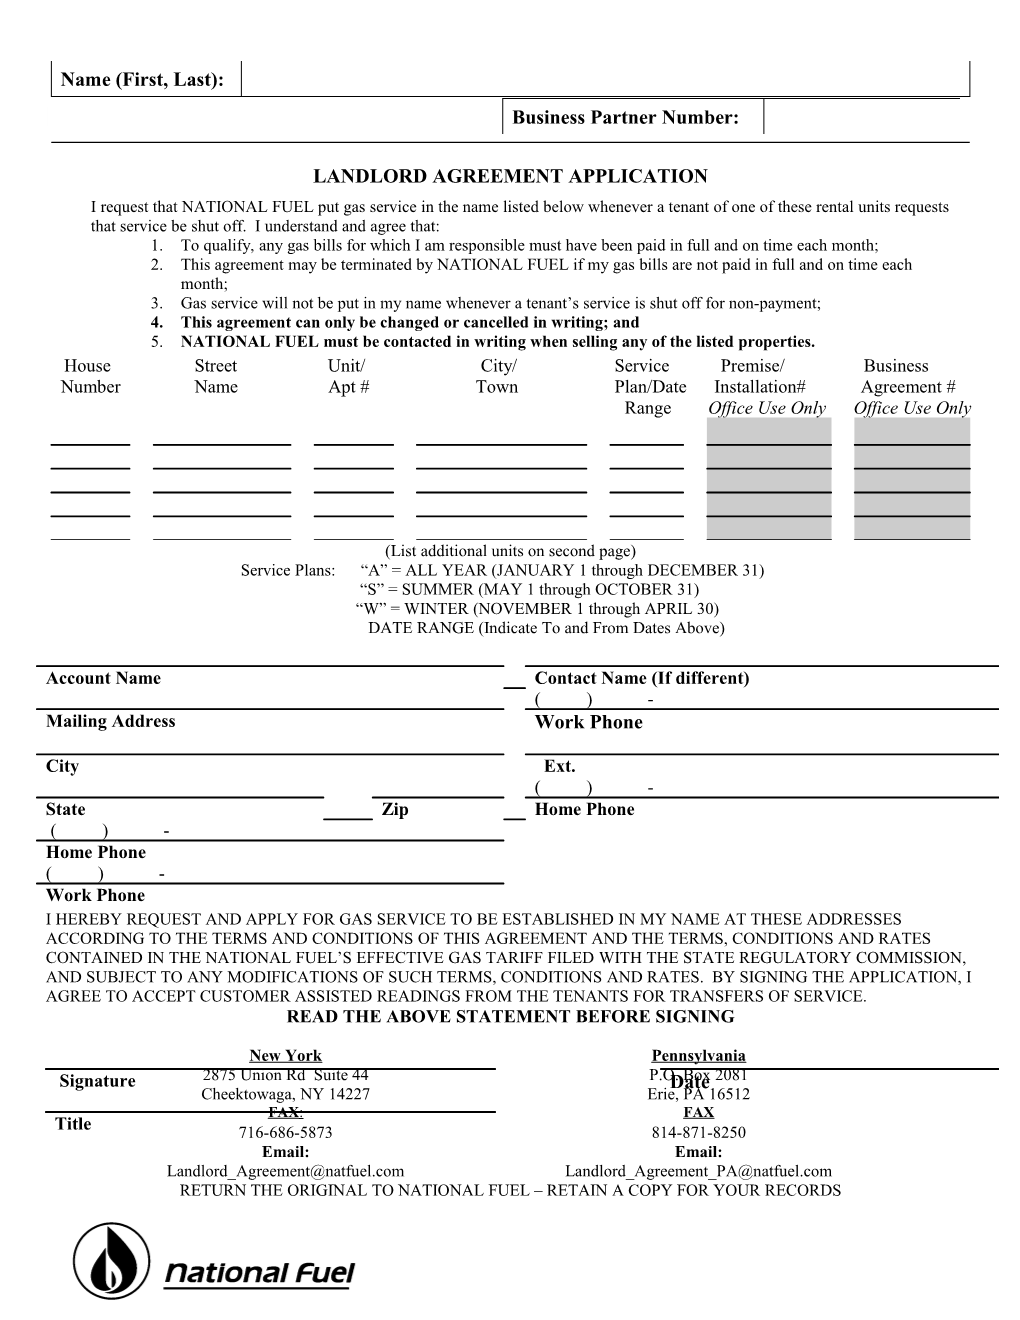 Landlord Agreement Application